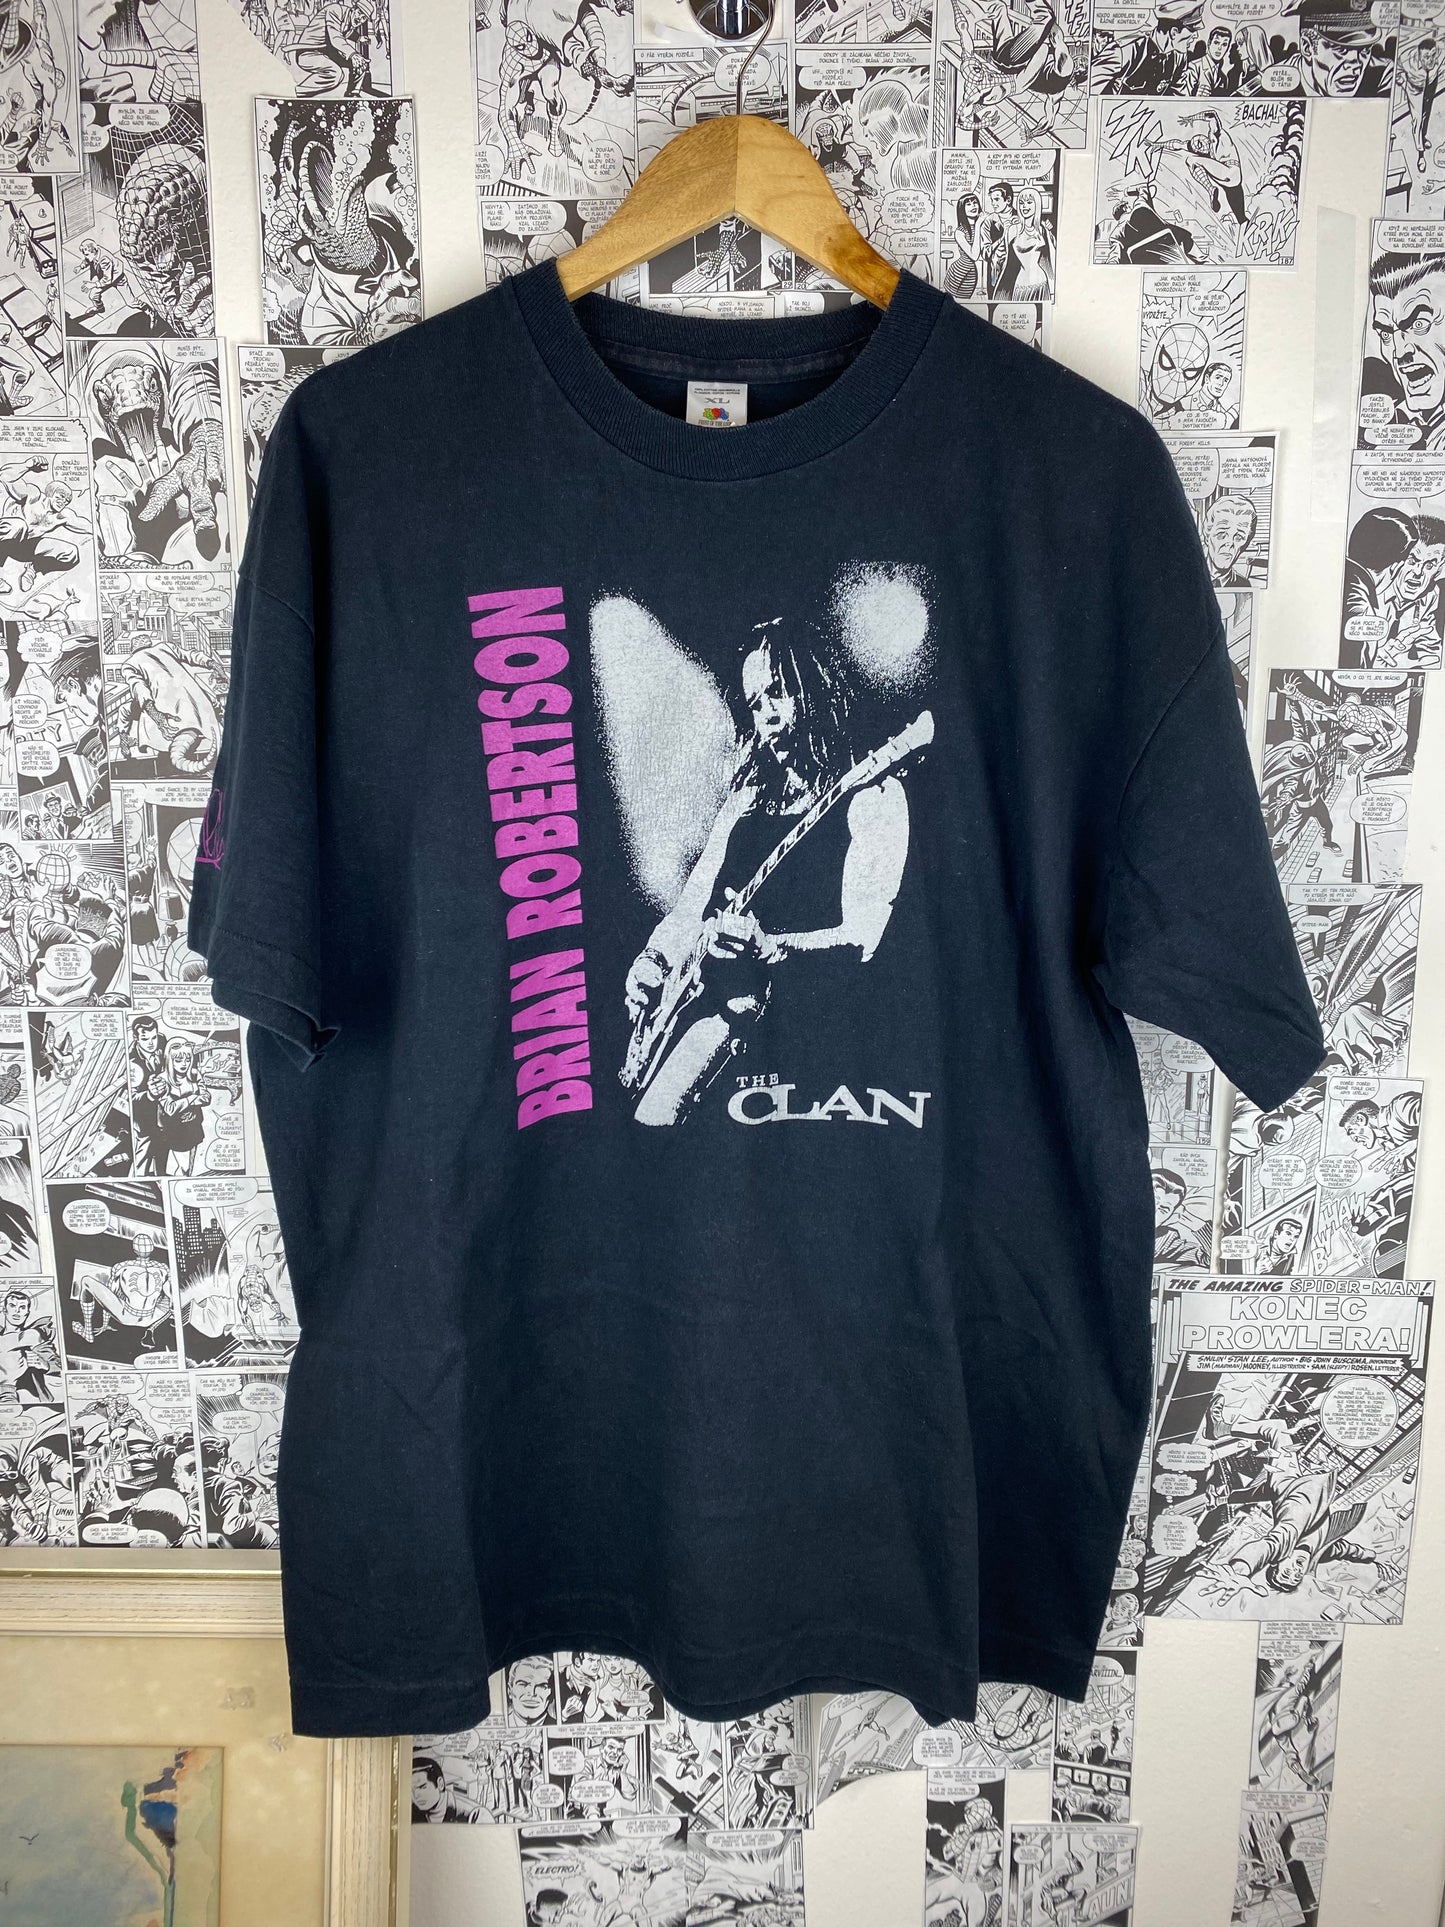 Vintage - The Clan - Brian Robertson 90s t-shirt - size XL